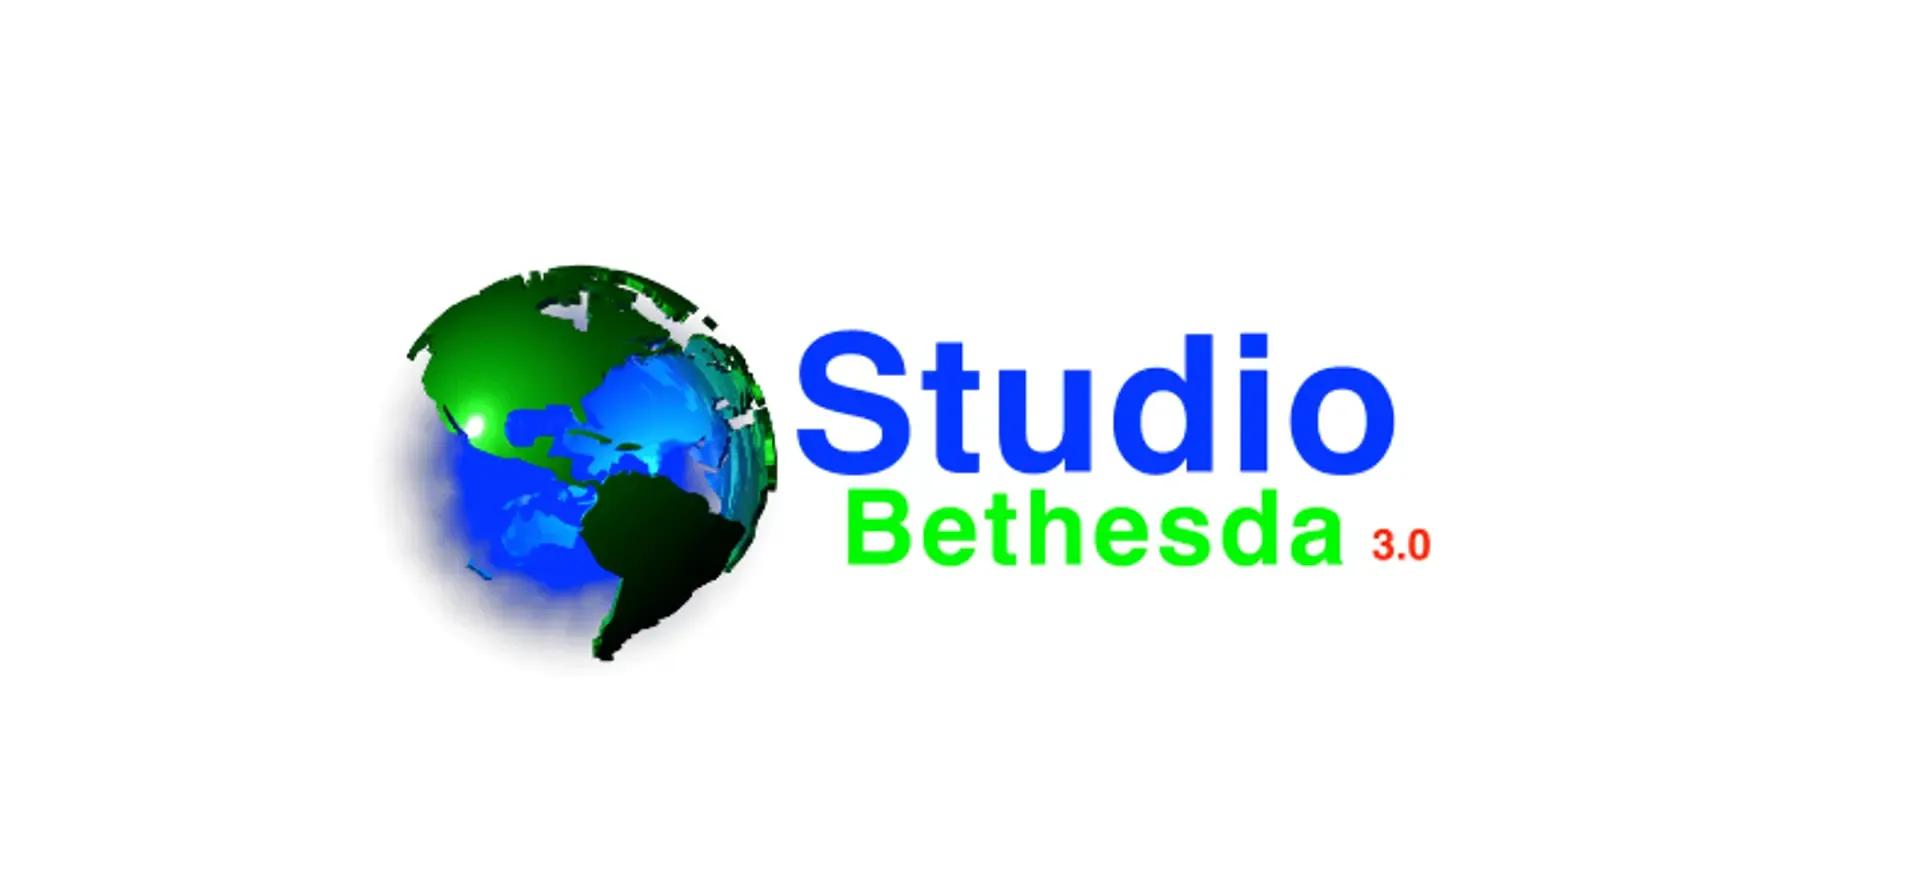 Studio Bethesda